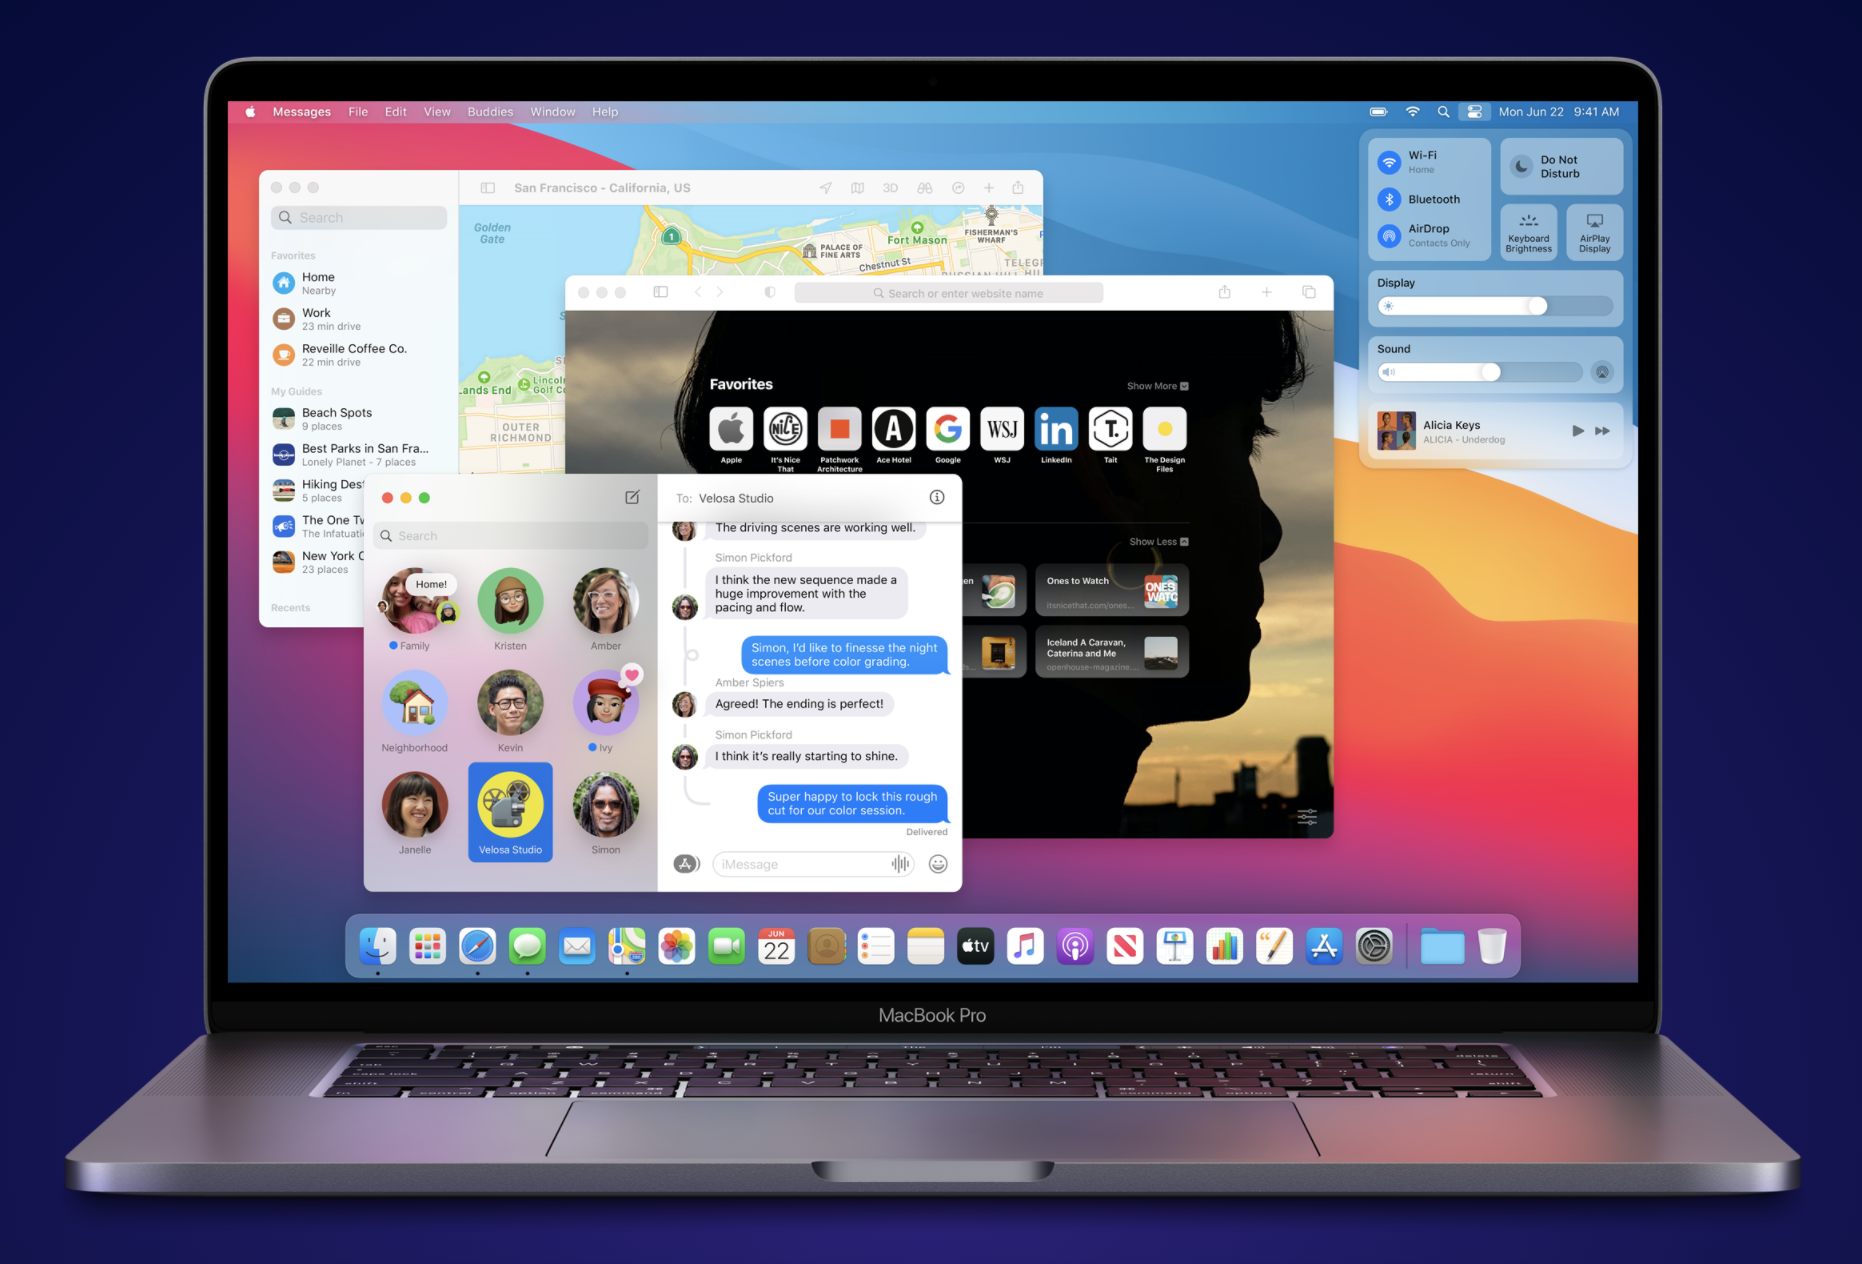 Macbook with macOS 11 Big Sur Release